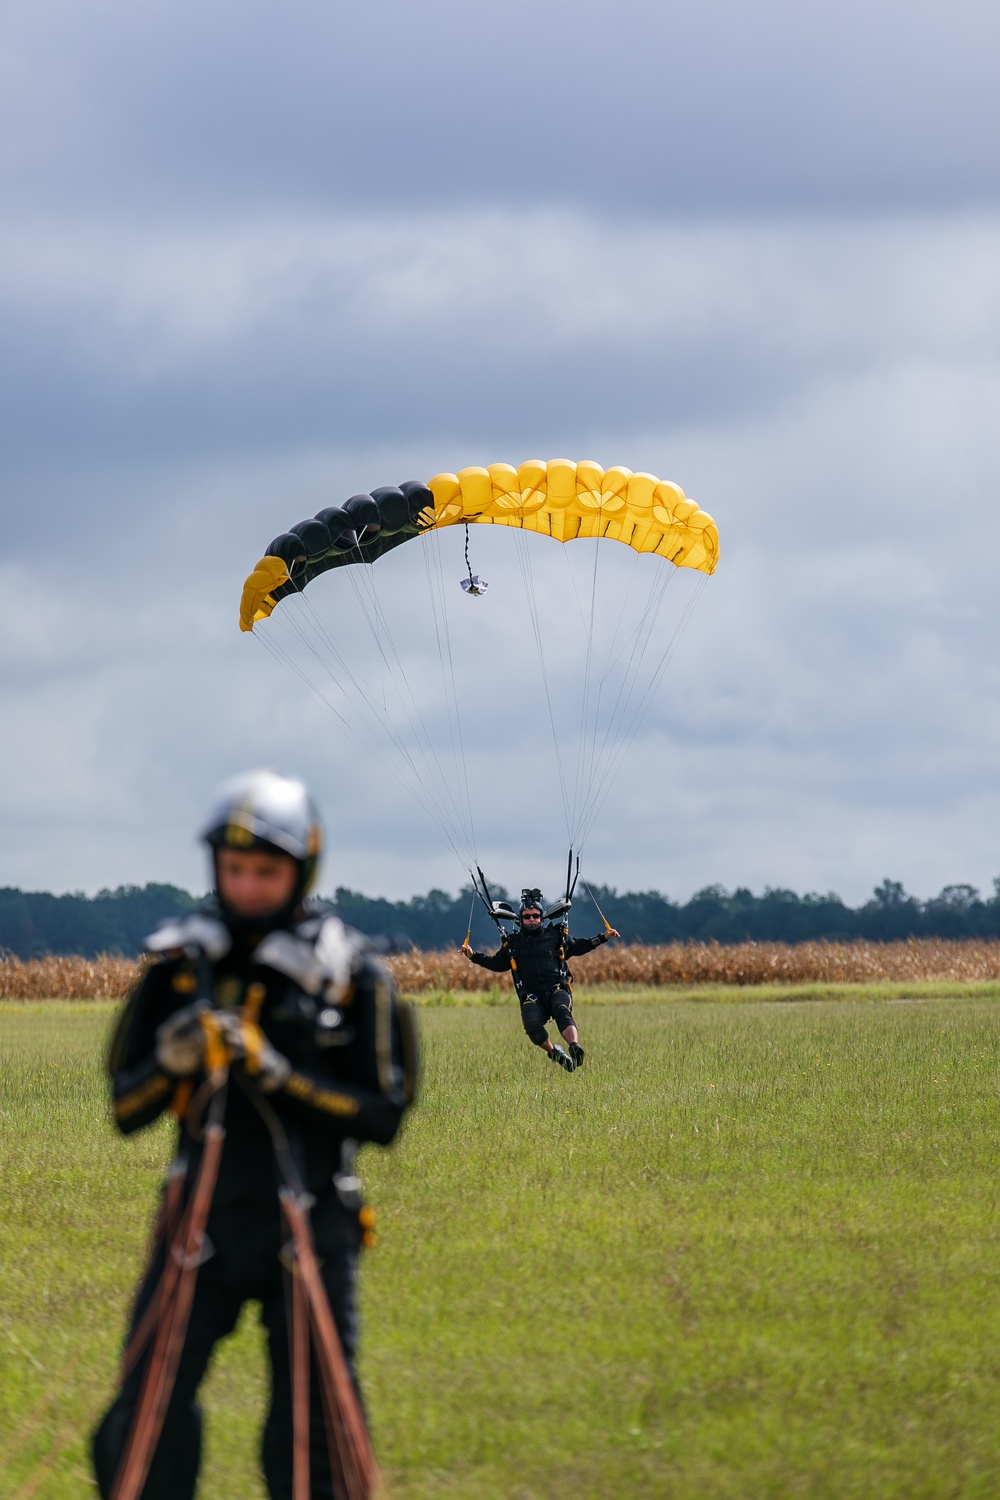 U.S. Army Parachute Team Soldier makes training jump